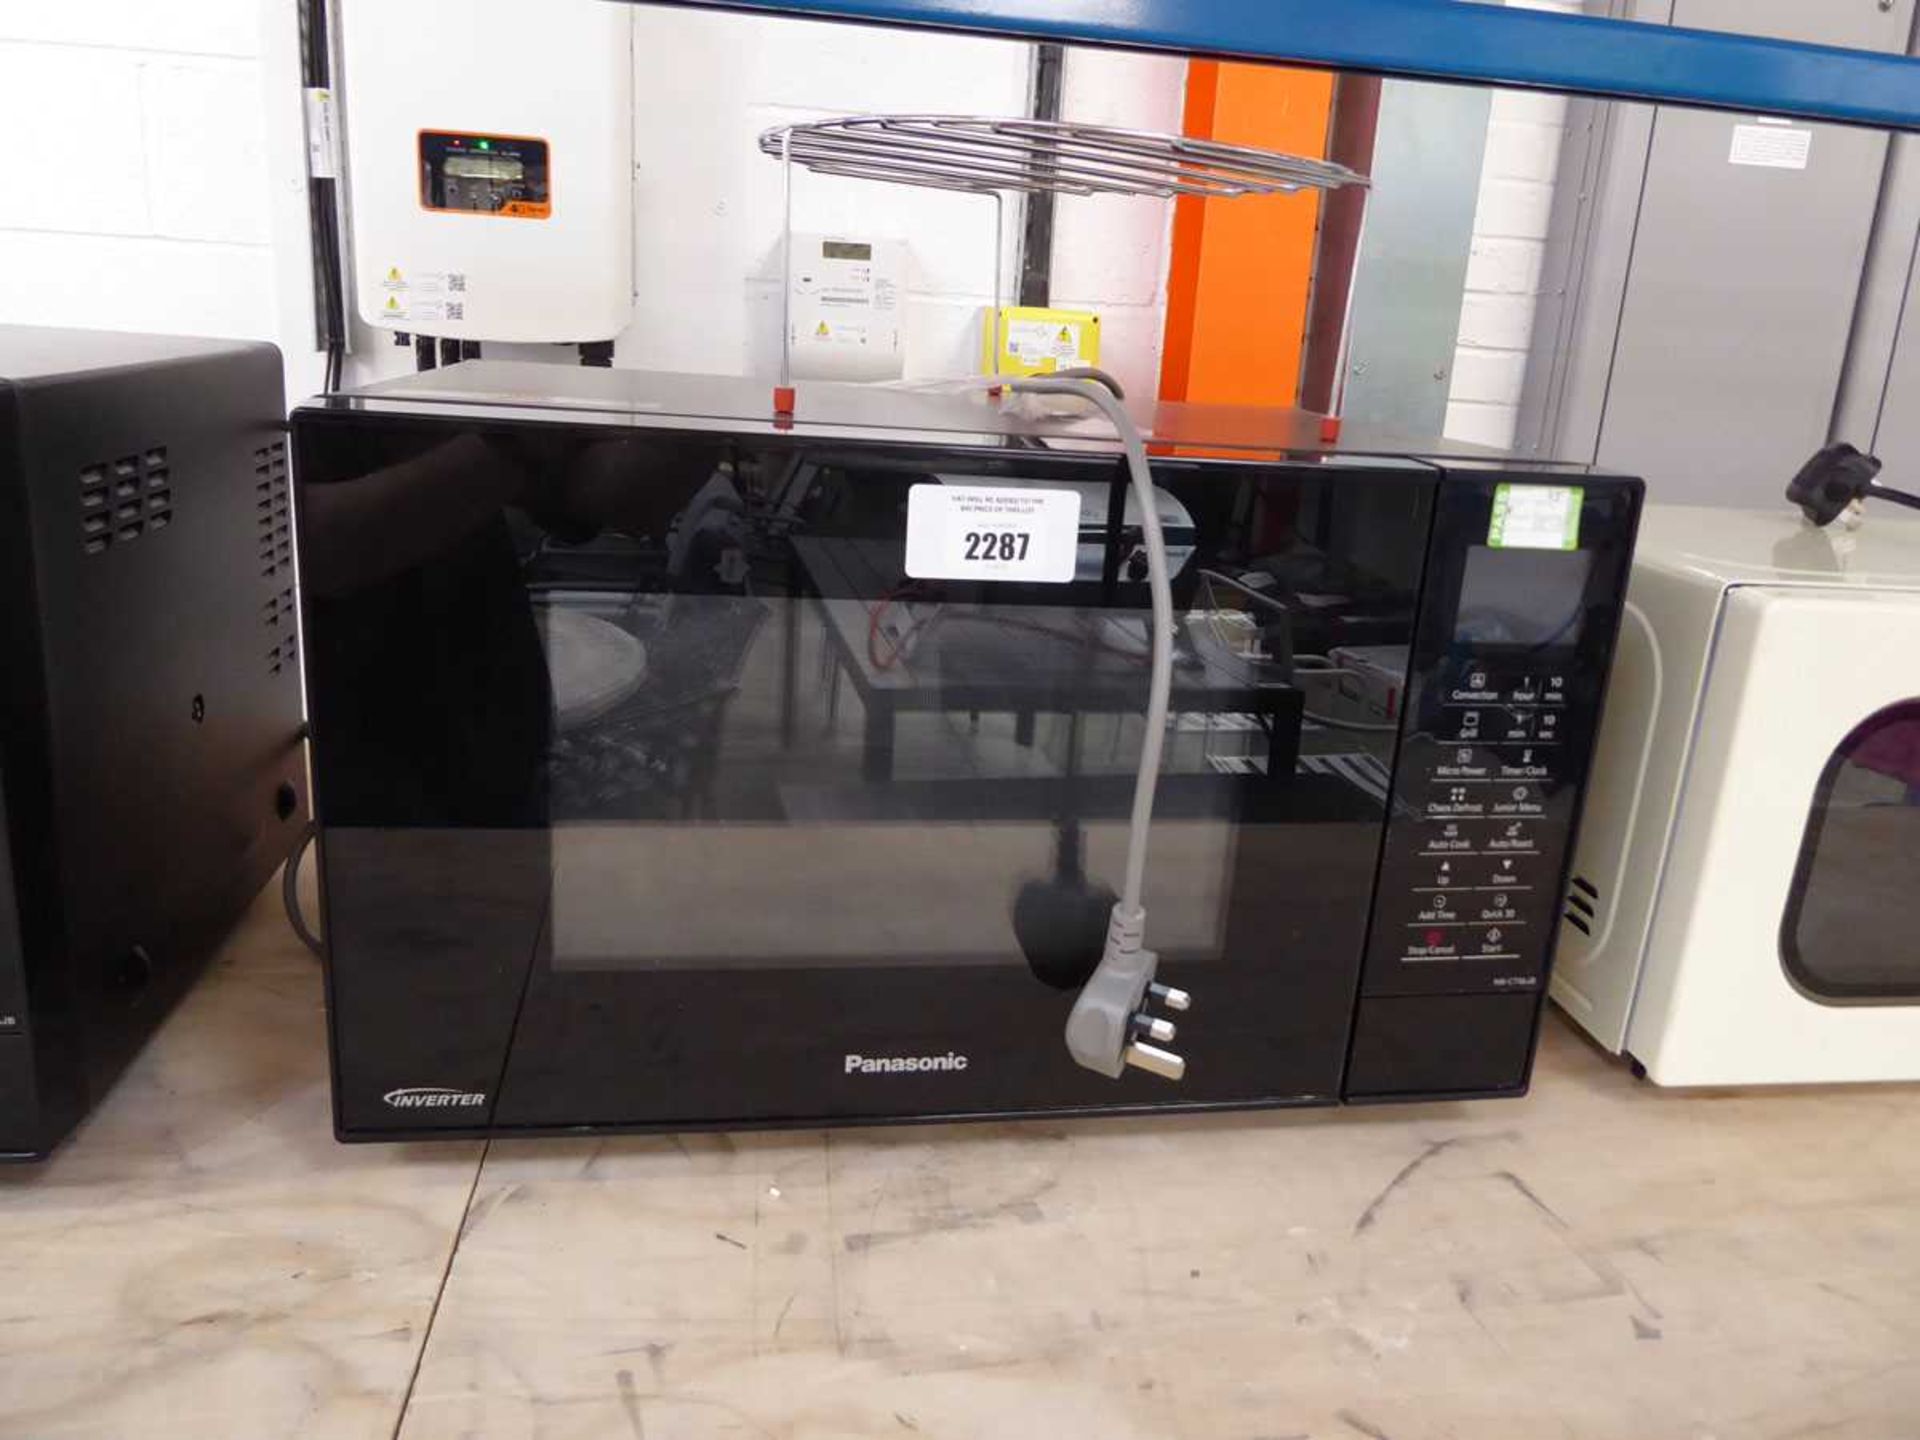 +VAT Panasonic NN.CT56JB inverter microwave in black